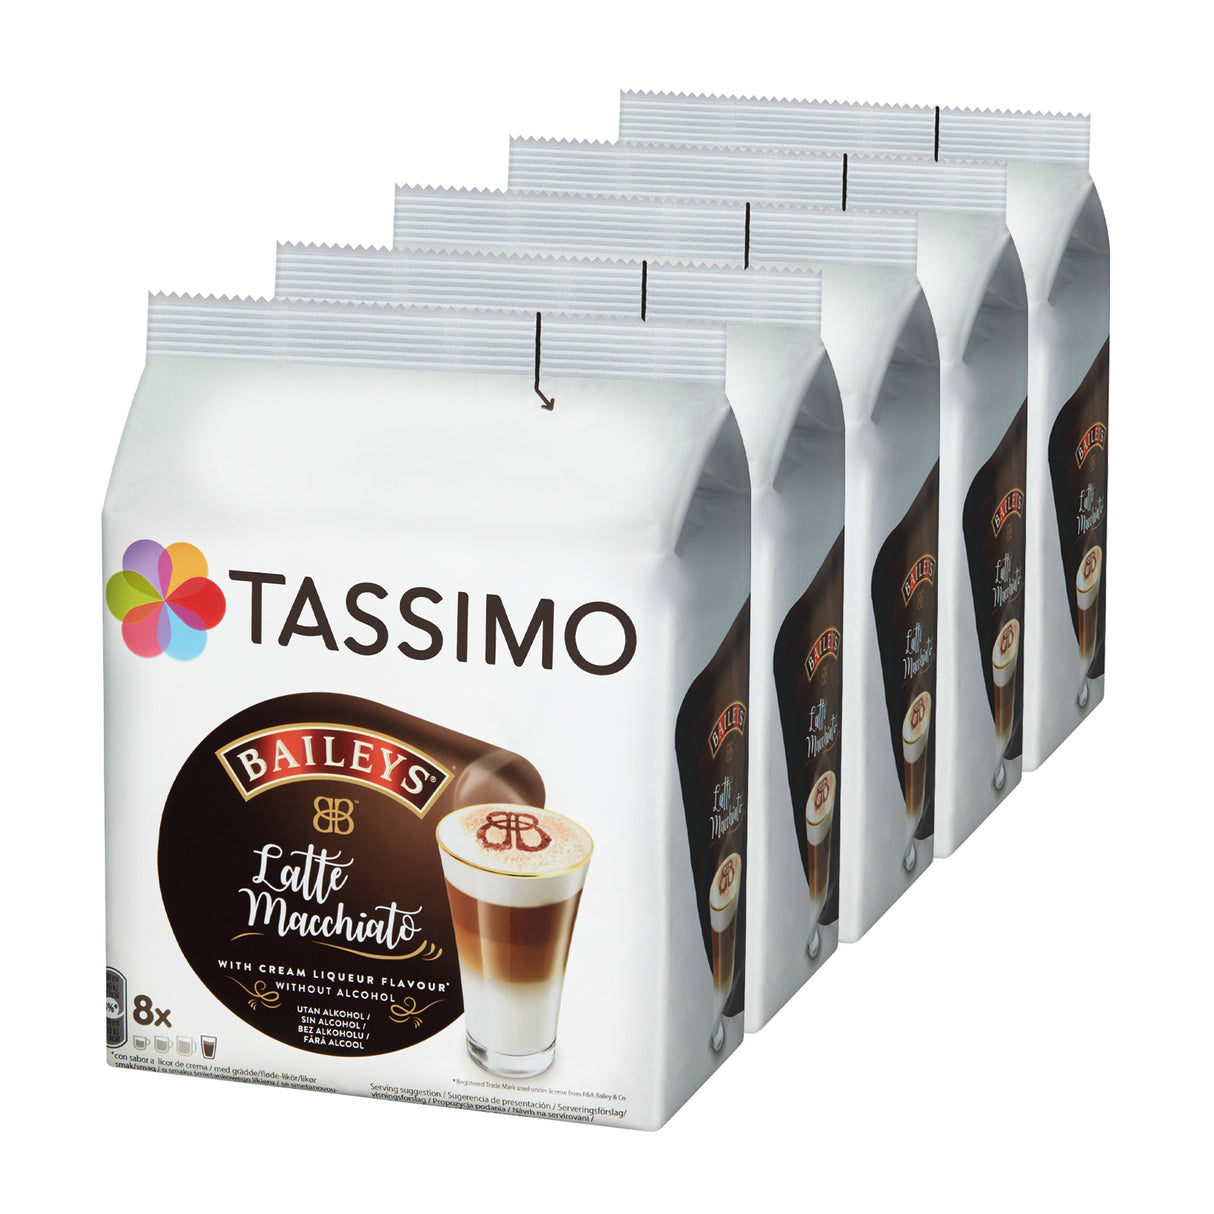 Tassimo Baileys Latte Macchiato Case